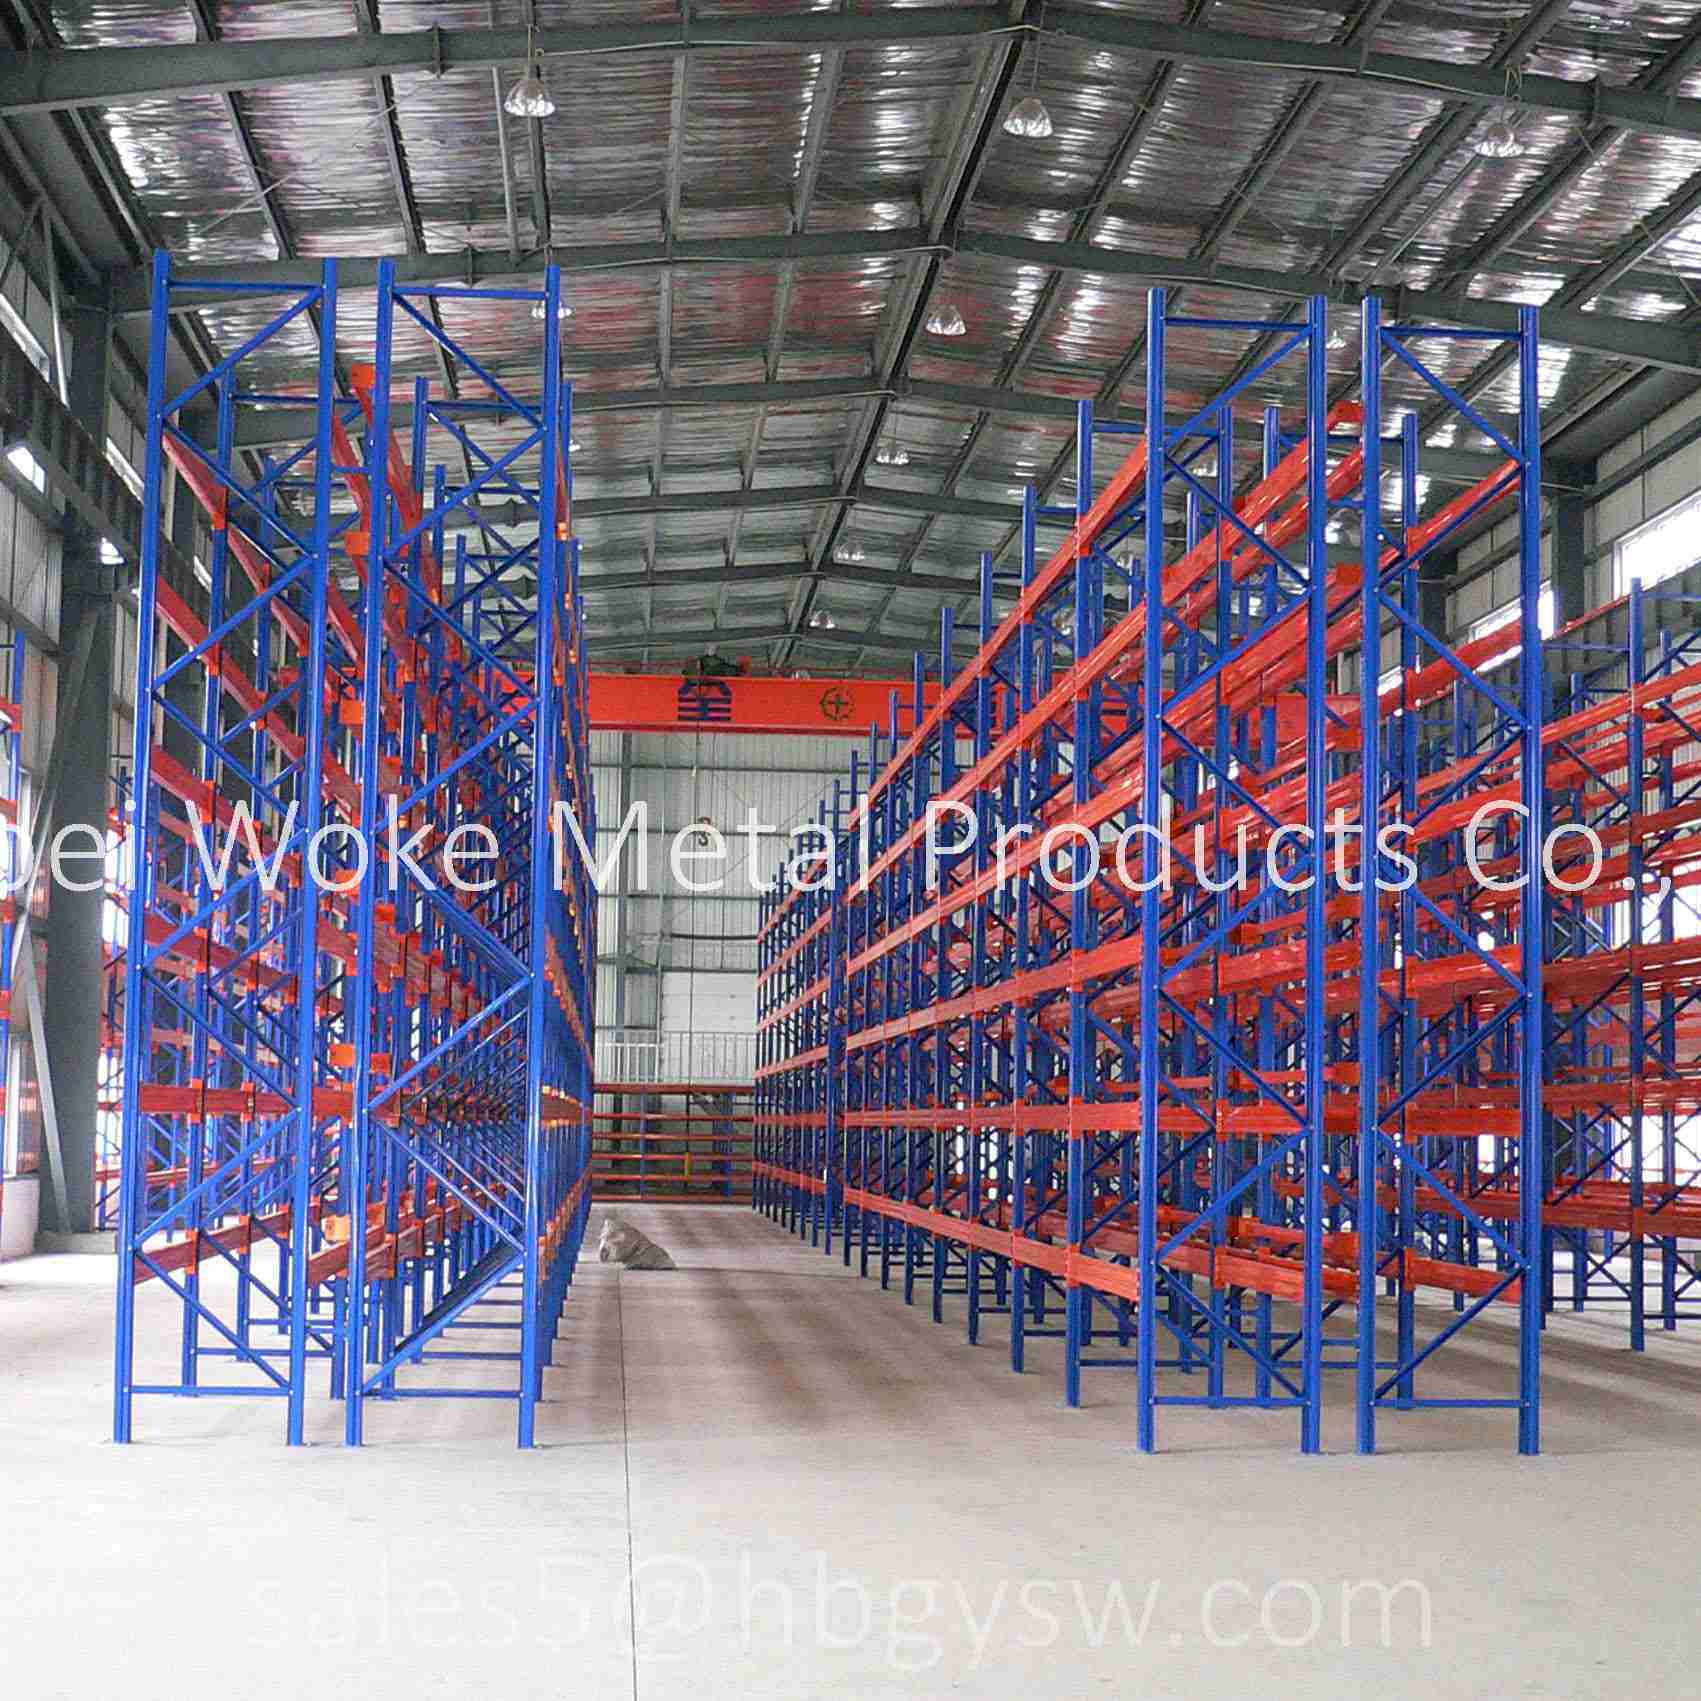 Medium Duty Warehouse Rack with Good Quality